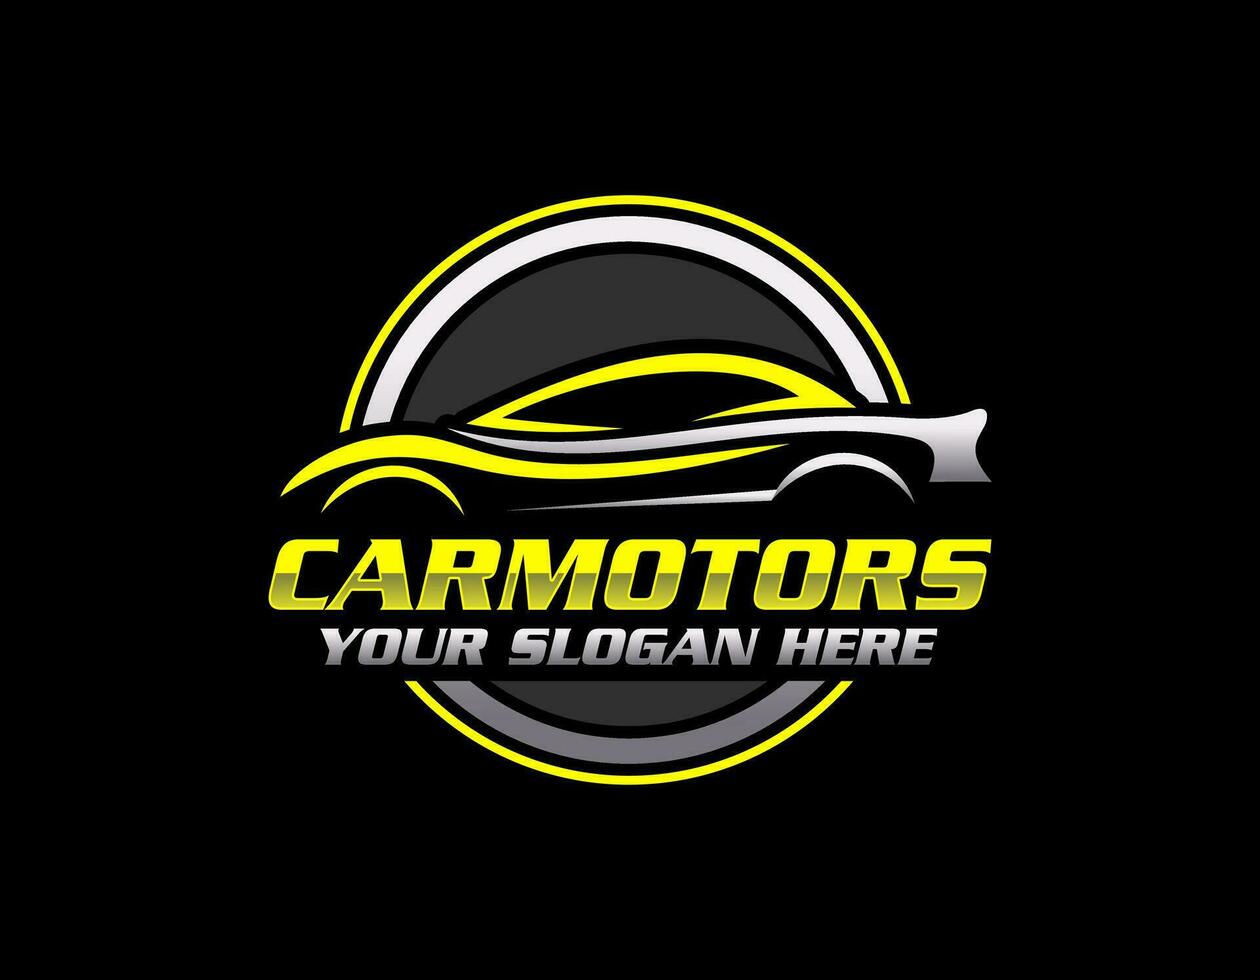 vector ilustración coche alquiler logo plantilla, emblema, insignias aislado en negro fondo, oscuro logo con atractivo color degradado.